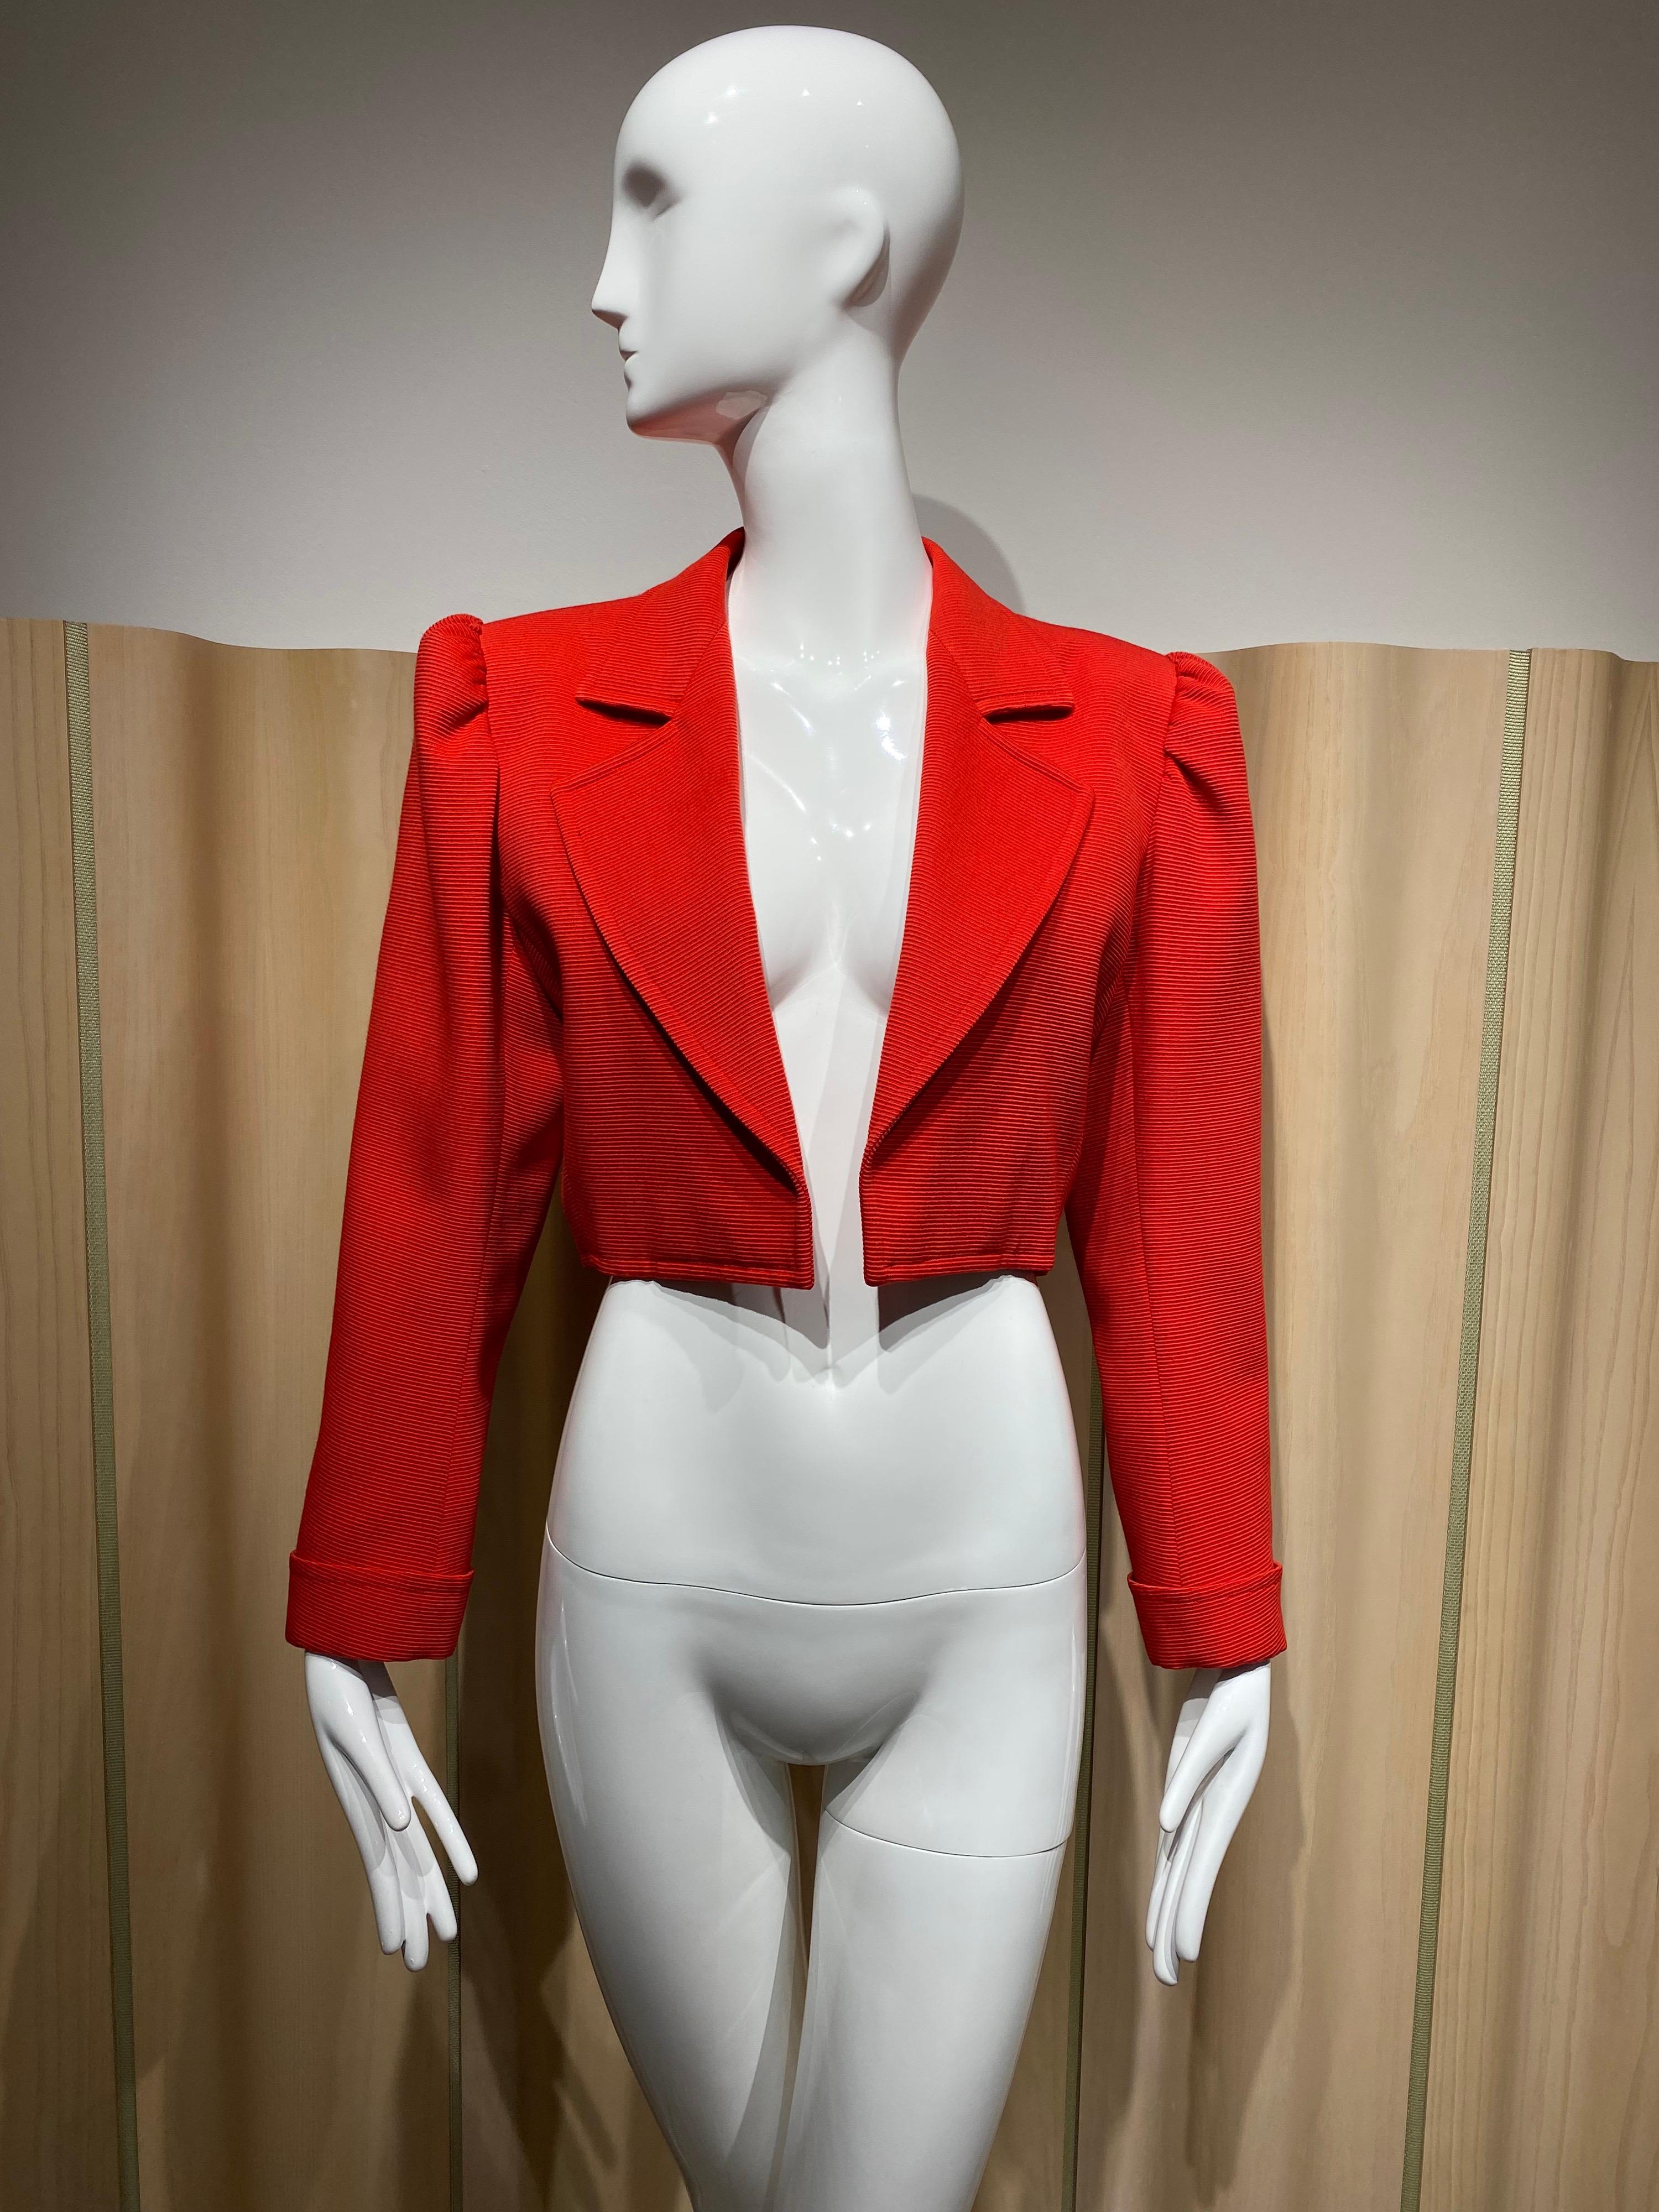 1980s Yves Saint Laurent , Saint laurent rive gauche Orange Red wool Crop Jacket Blazer. 
Jacket is lined in silk
Marked size :42. Fit US size 4/6 
Measurement : Bust: 36.5/ Jacket length : 17”/ Shoulder 15.5” / Sleeve length: 22”

** Saint Laurent